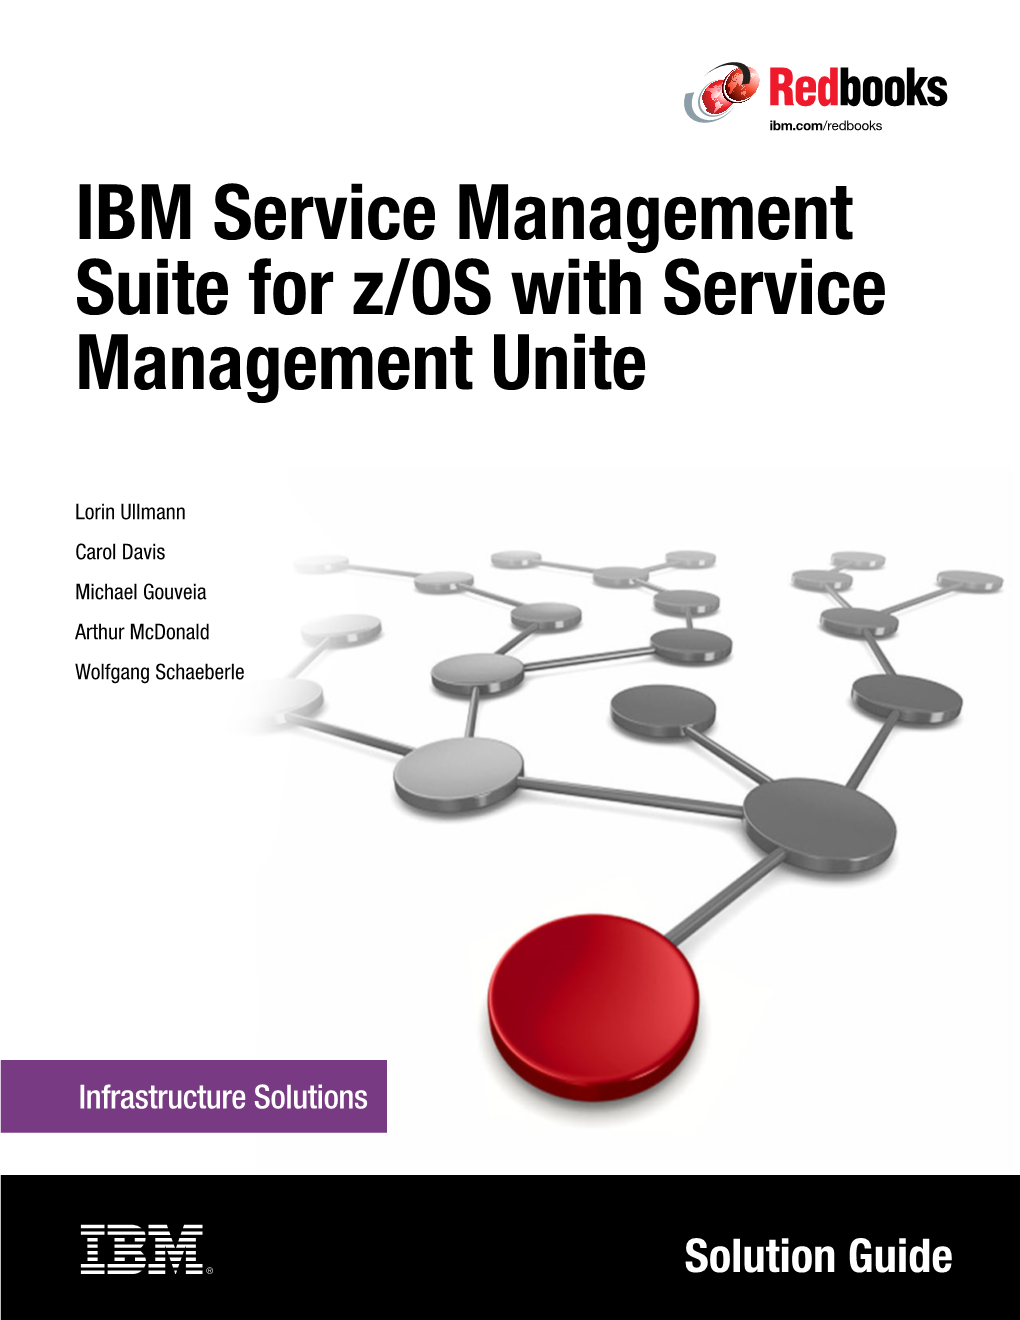 IBM Service Management Suite for Z/OS with Service Management Unite